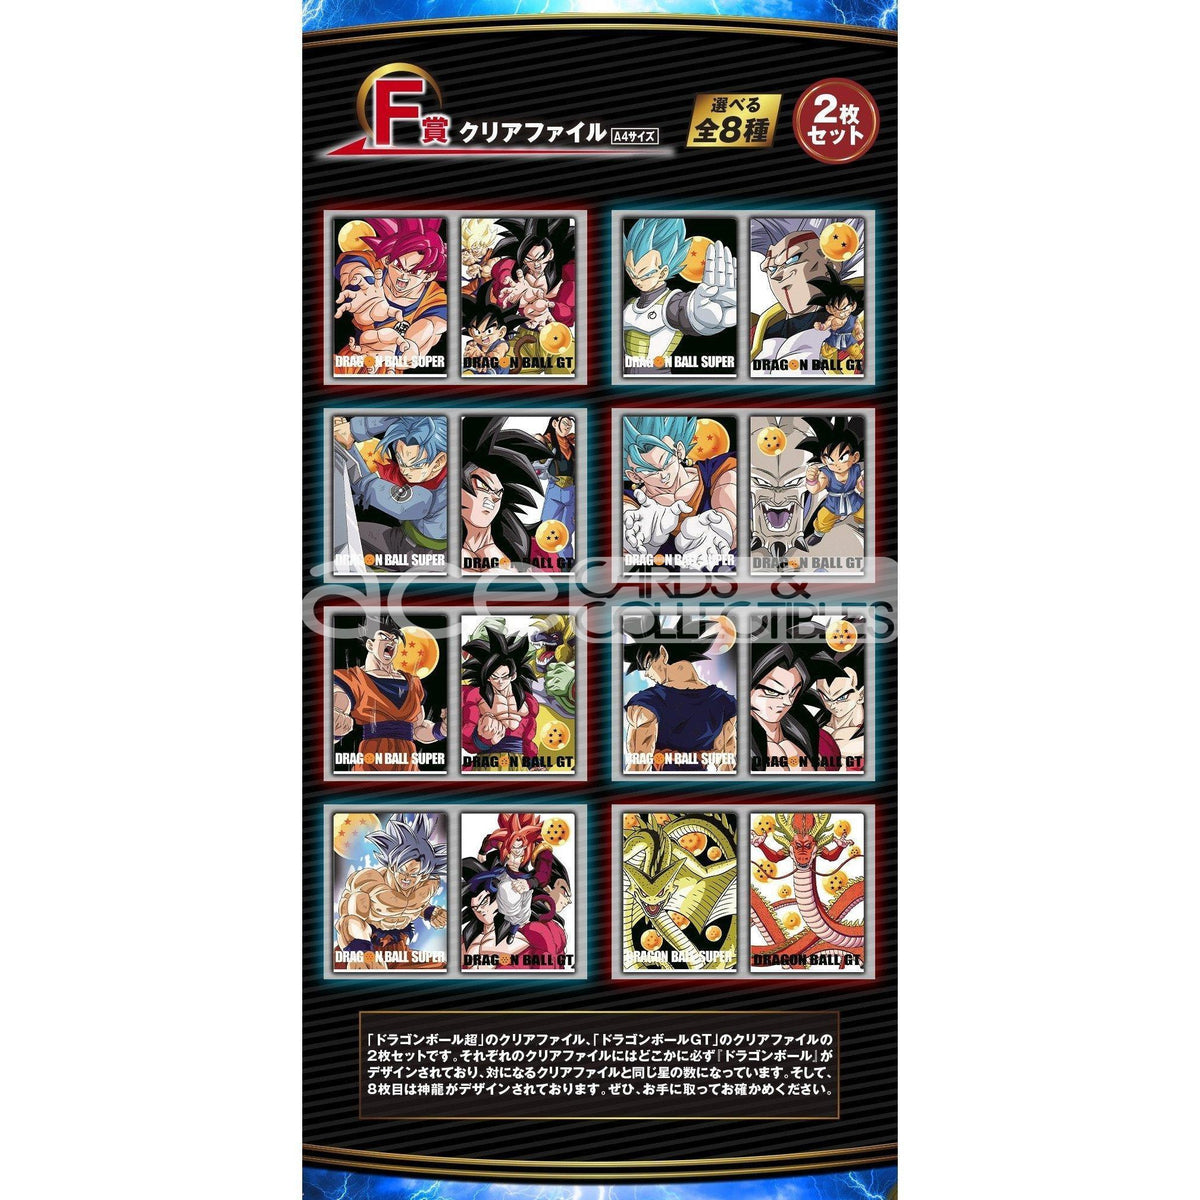 Ichiban Kuji Dragon Ball The Greatest Saiyan 2019-Bandai-Ace Cards &amp; Collectibles